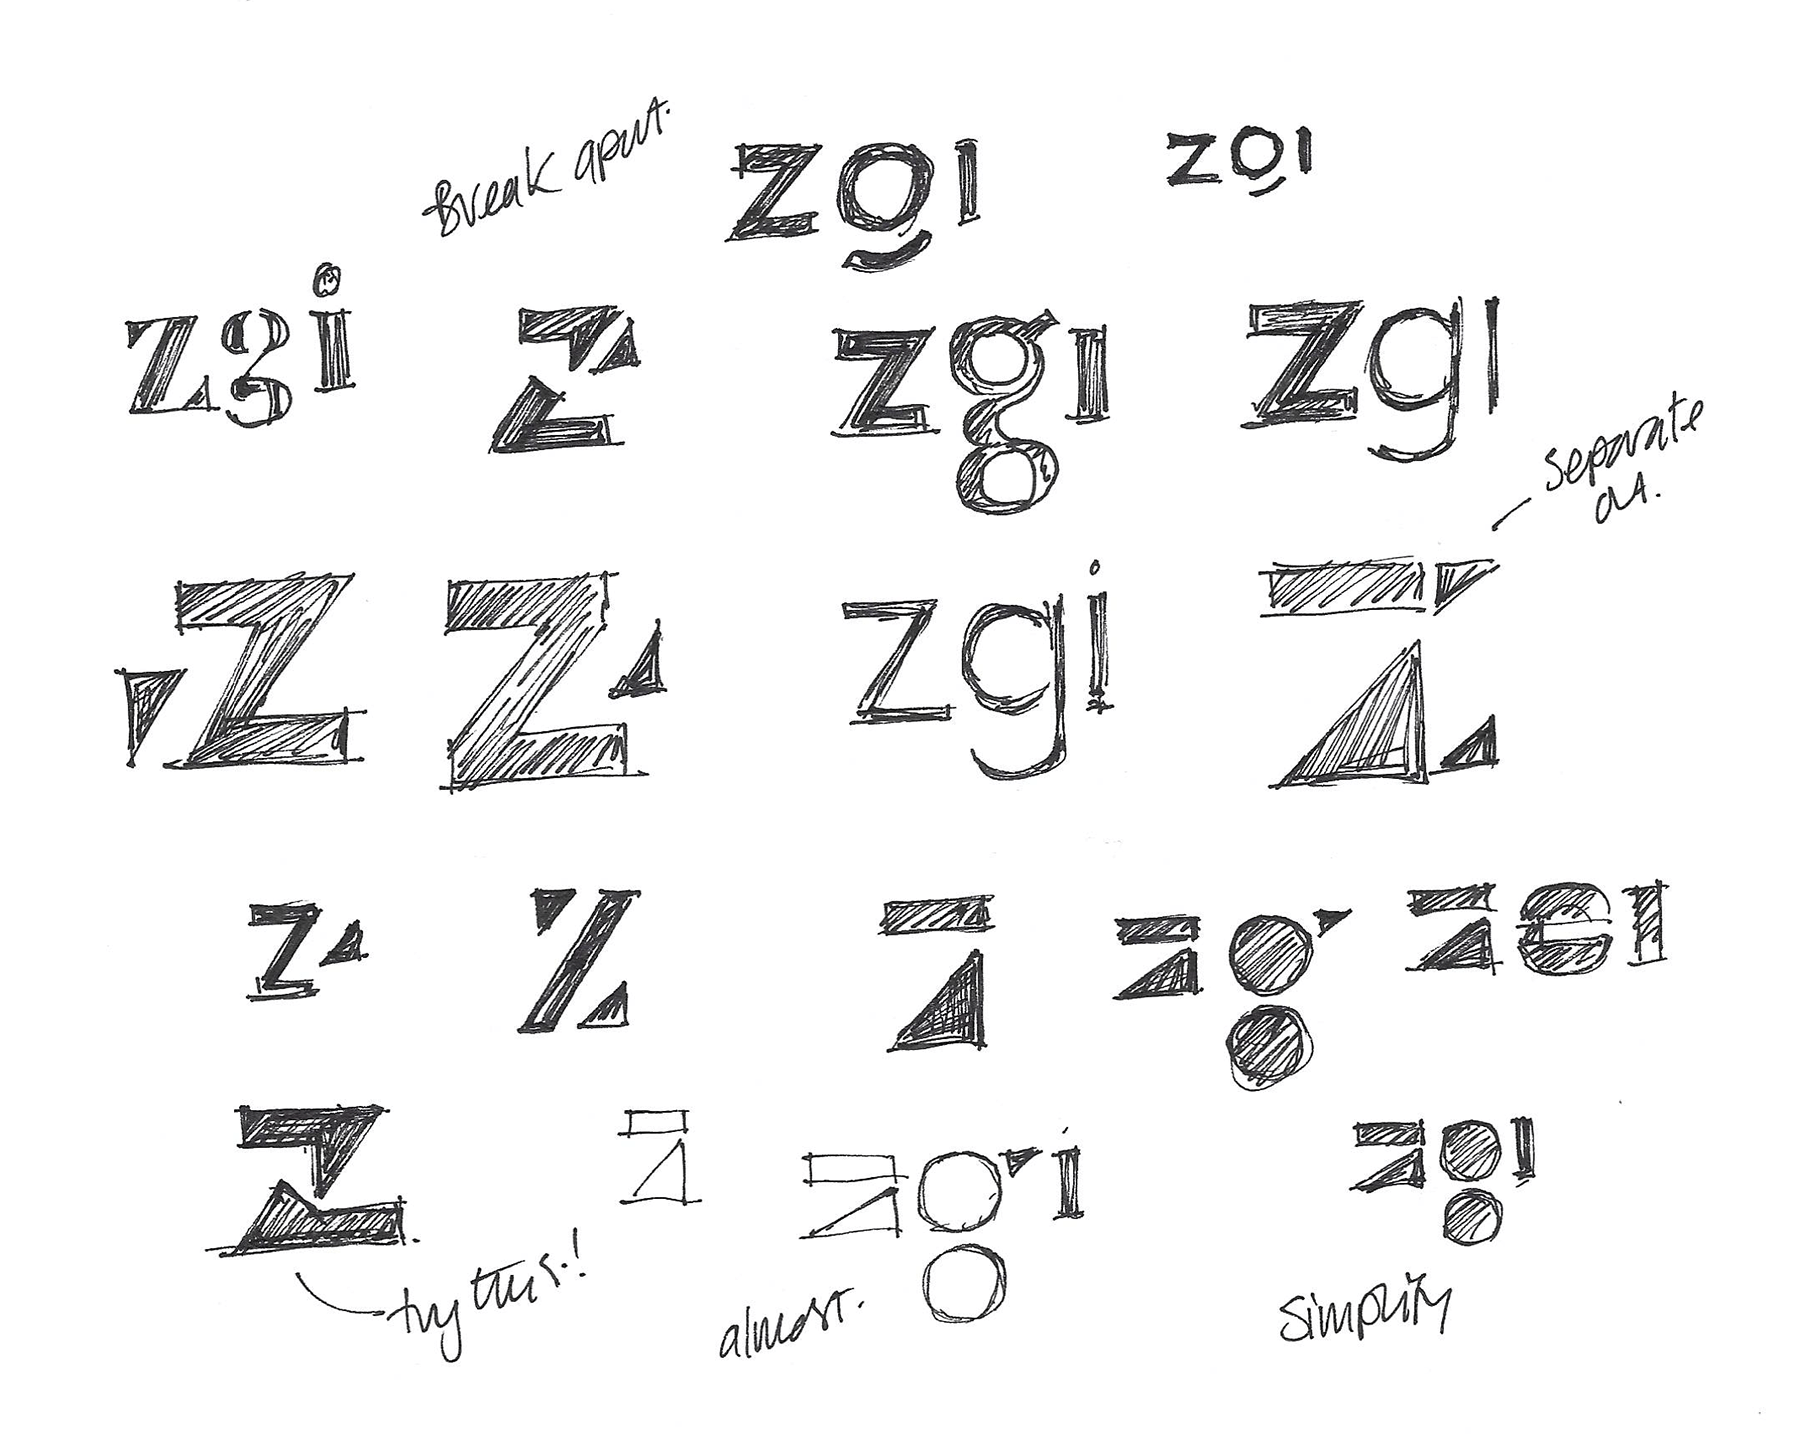 zgi-logo-sketches-2.png